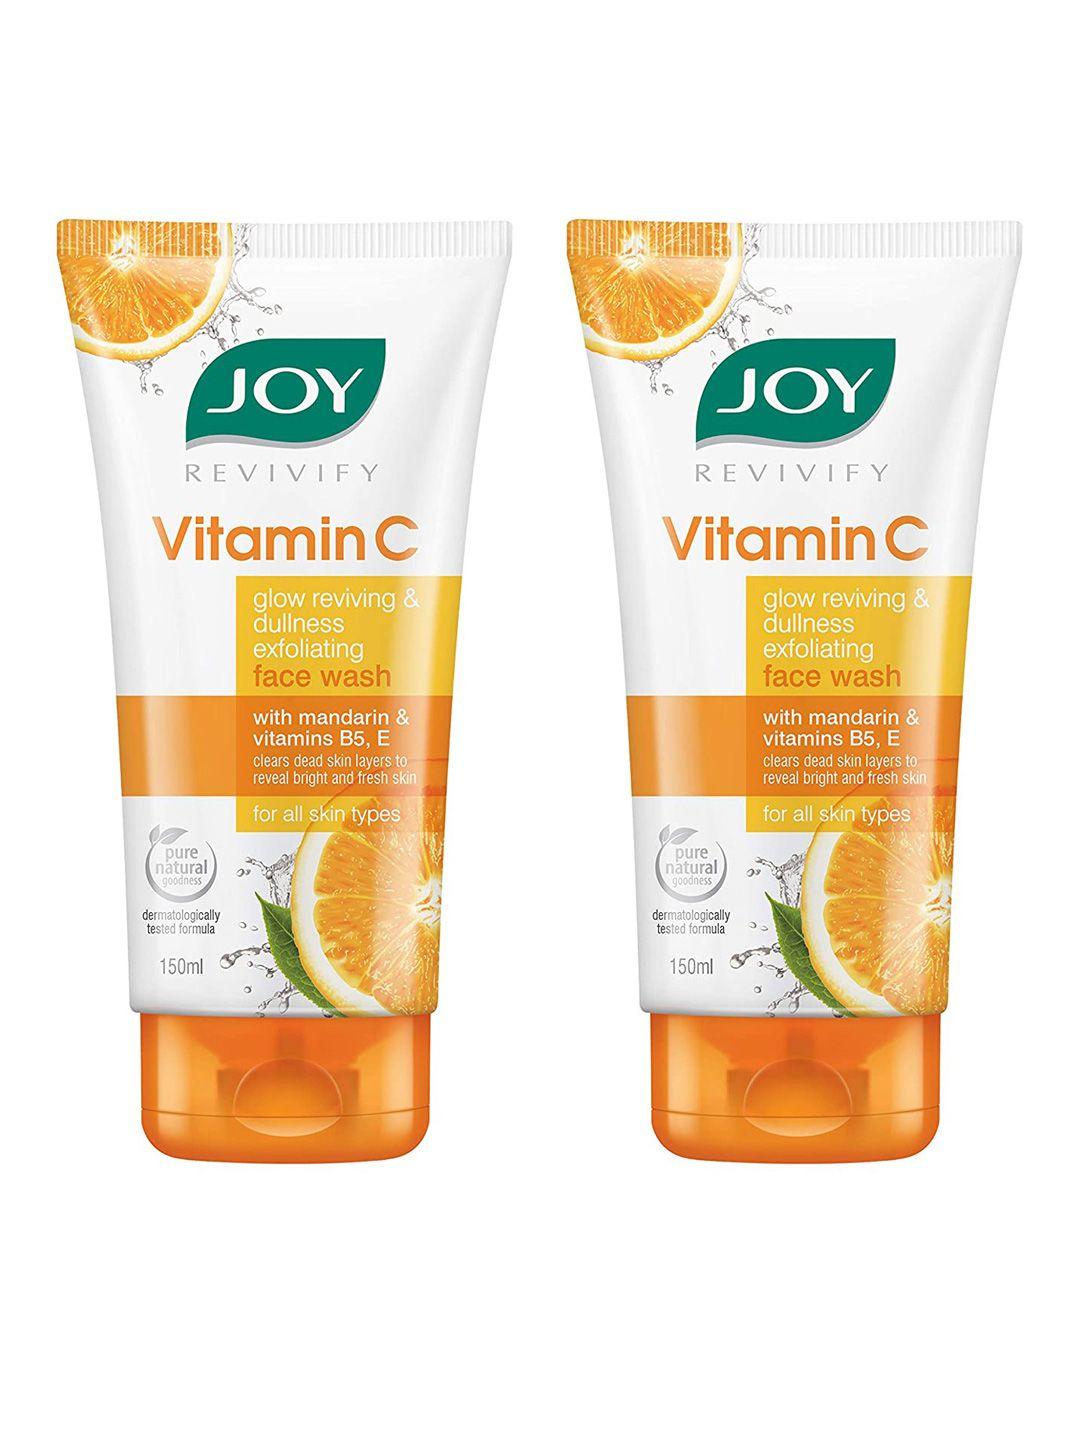 joy set of 2 revivify vitamin c glow reviving & dullness exfoliating face wash- 150ml each